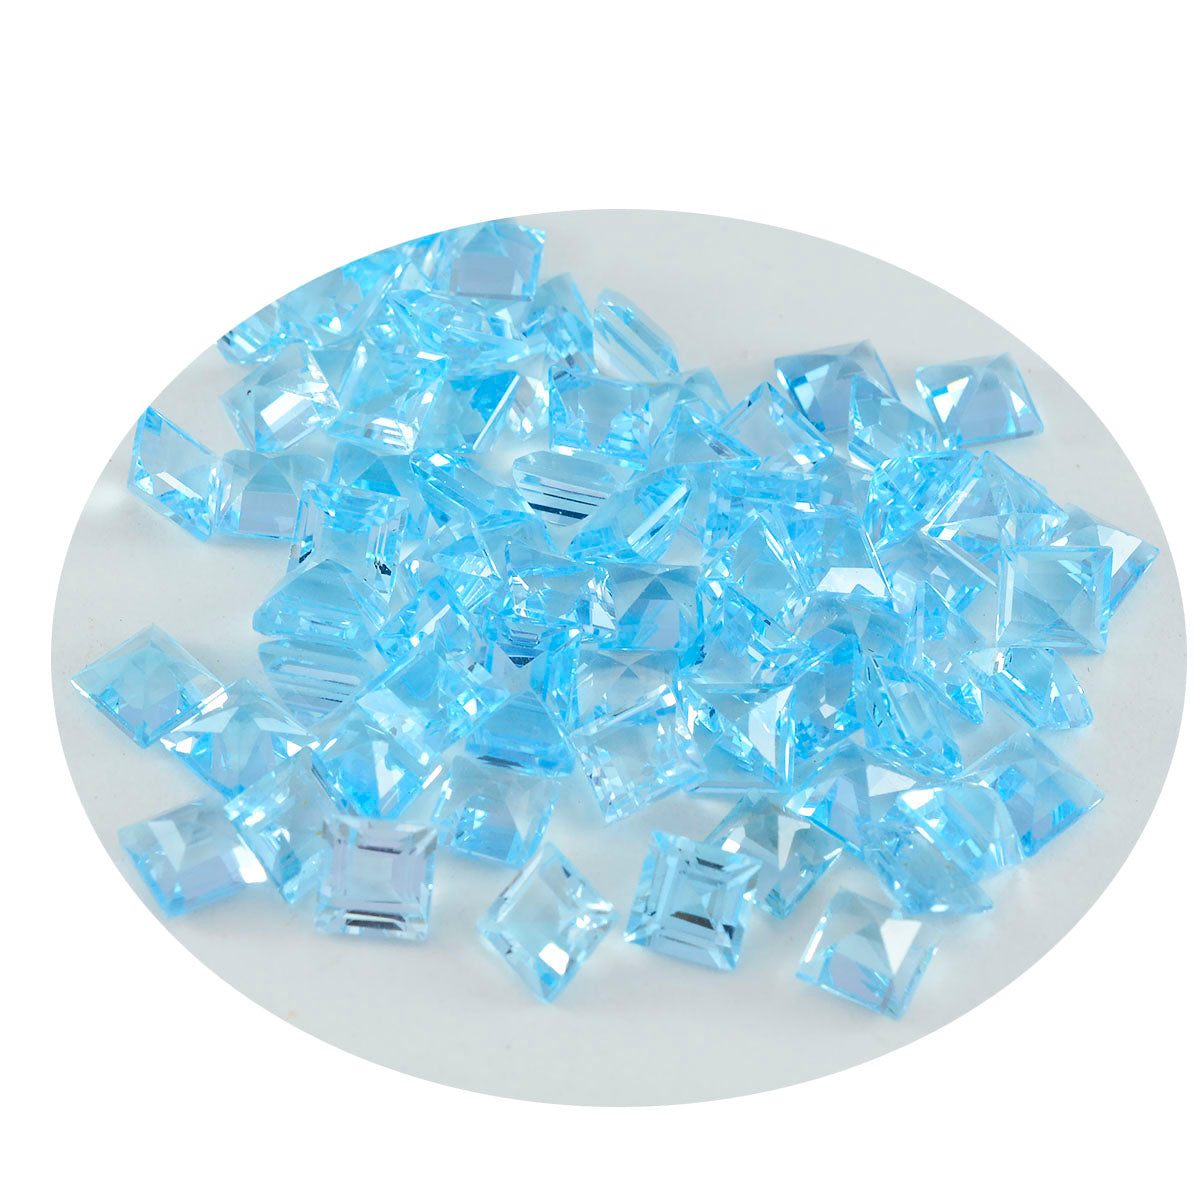 Riyogems 1PC Natural Blue Topaz Faceted 5x5 mm Square Shape Good Quality Gems